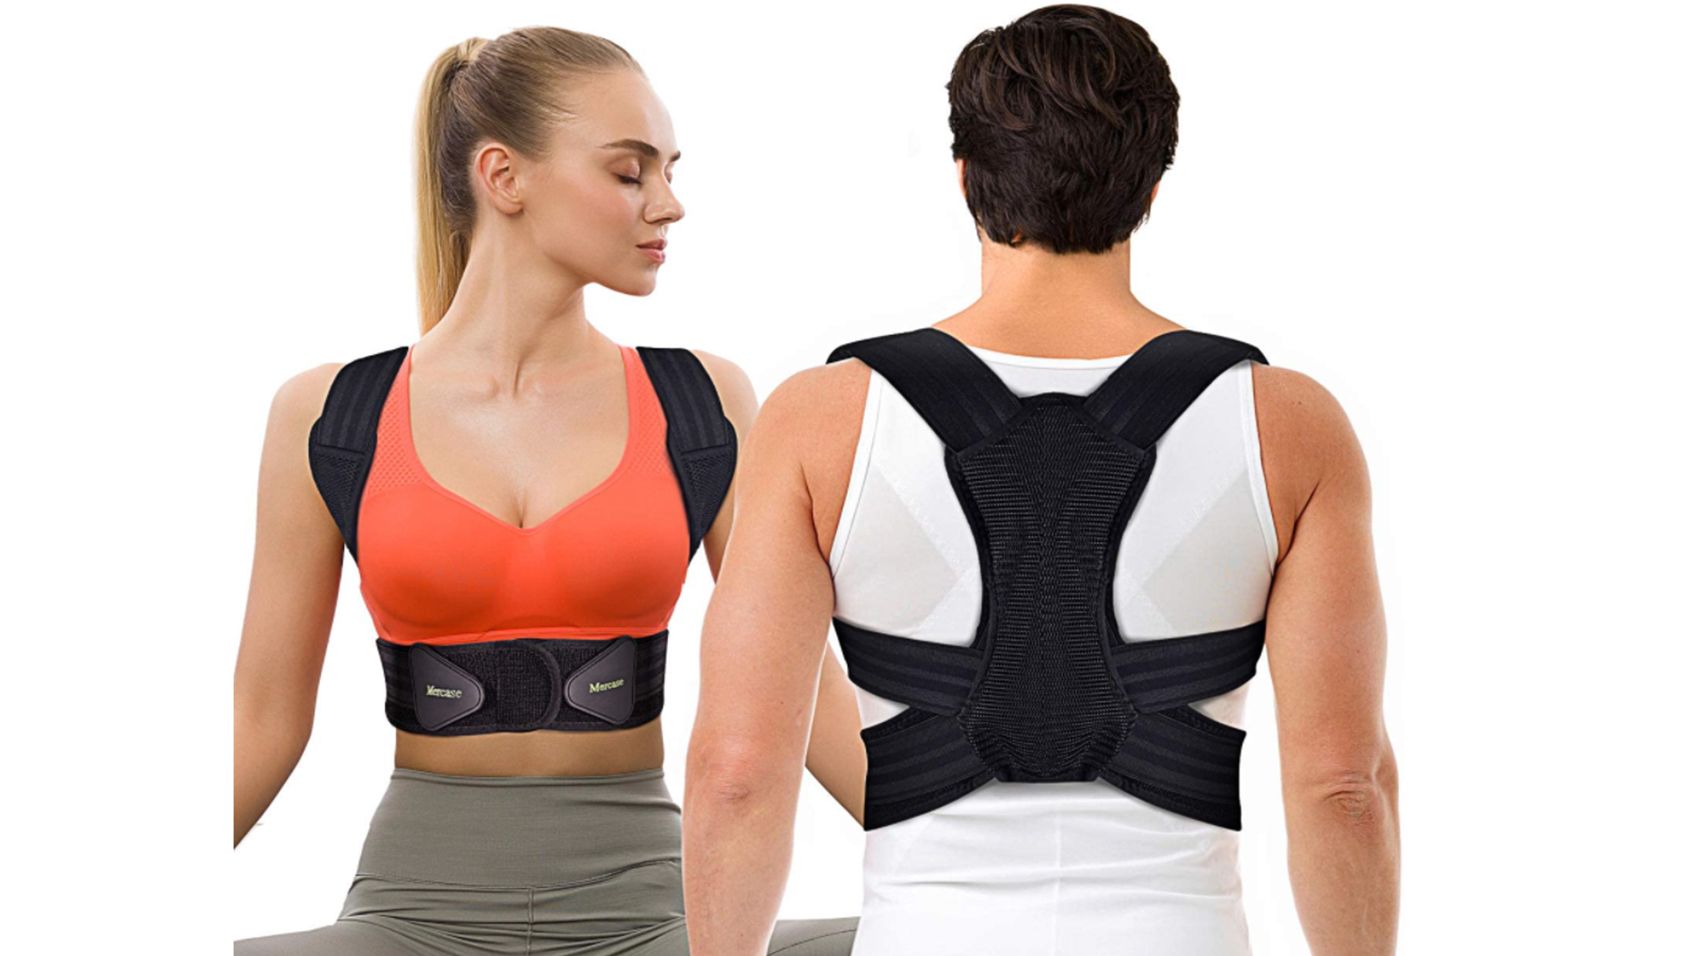 1 Pcs Mercase Posture Corrector for Men and Women, Back Brace for